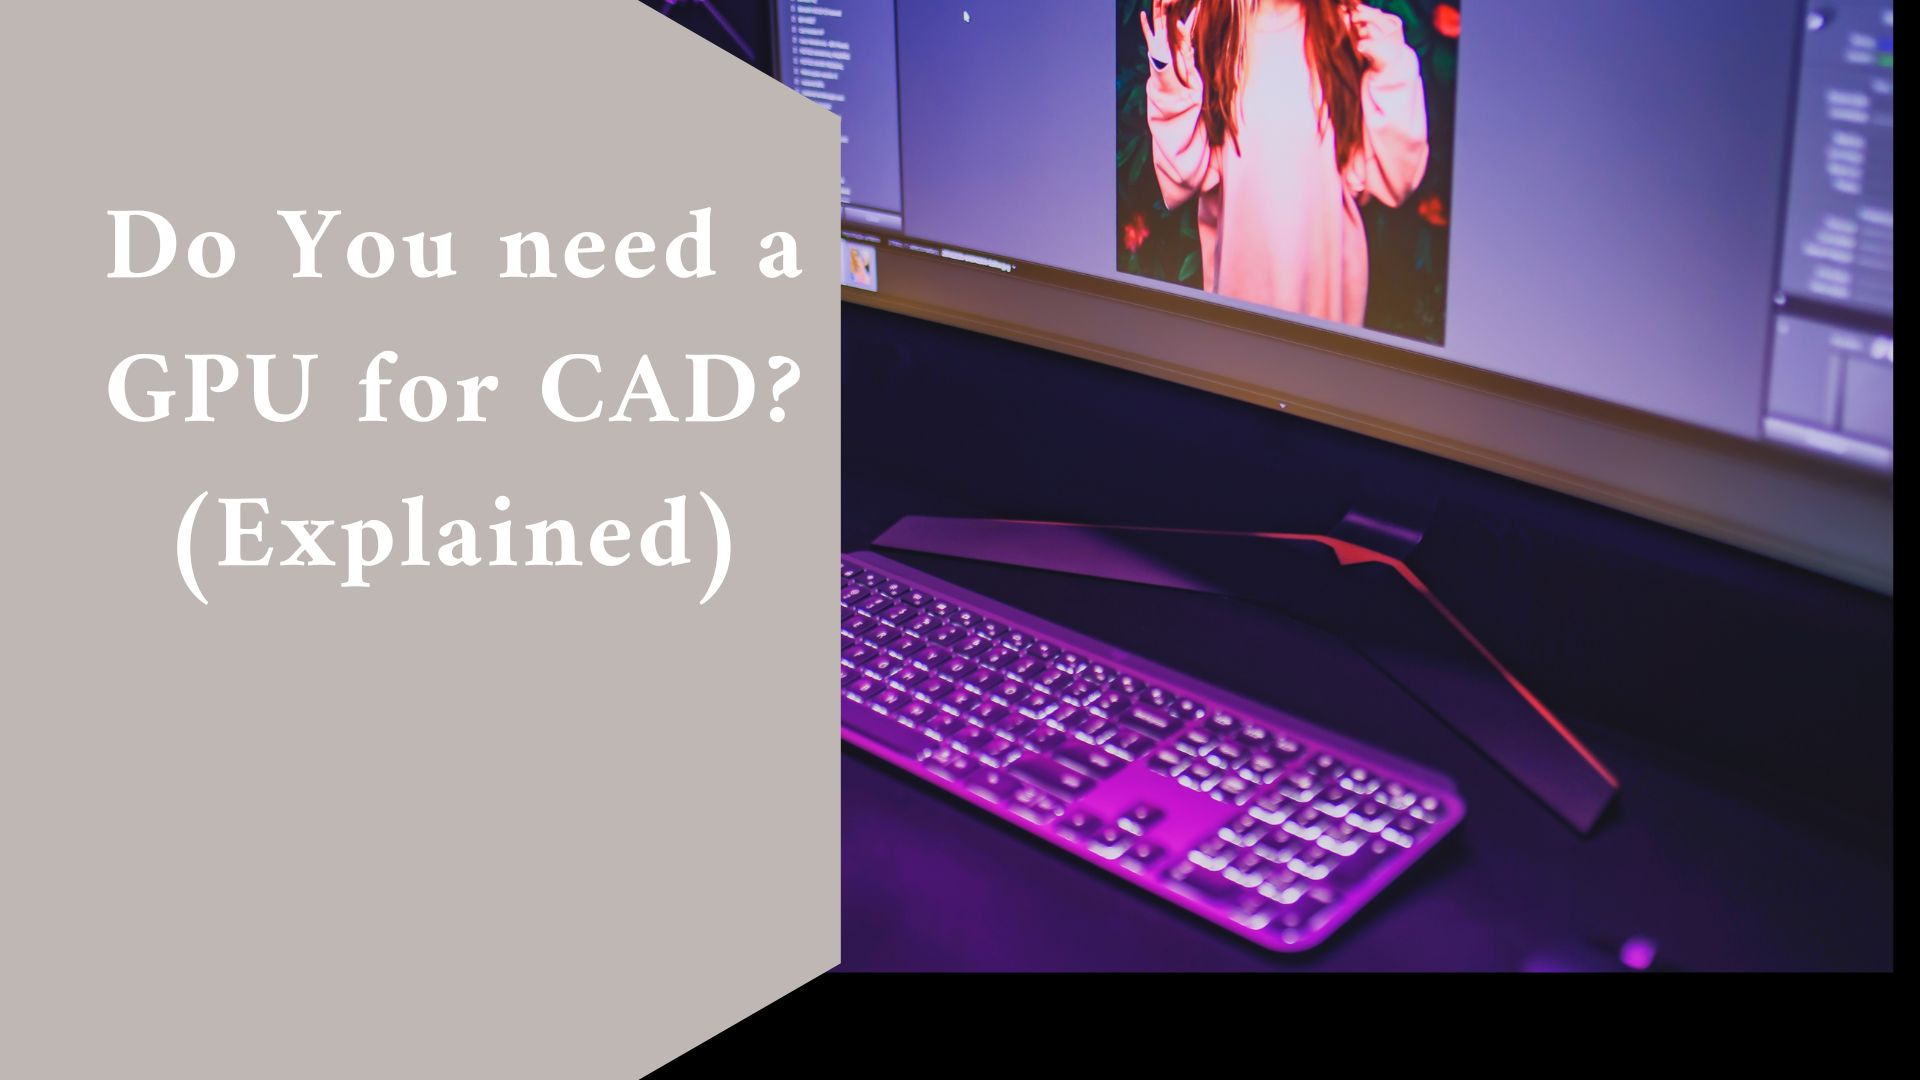 Do You need a GPU for CAD? (Explained)